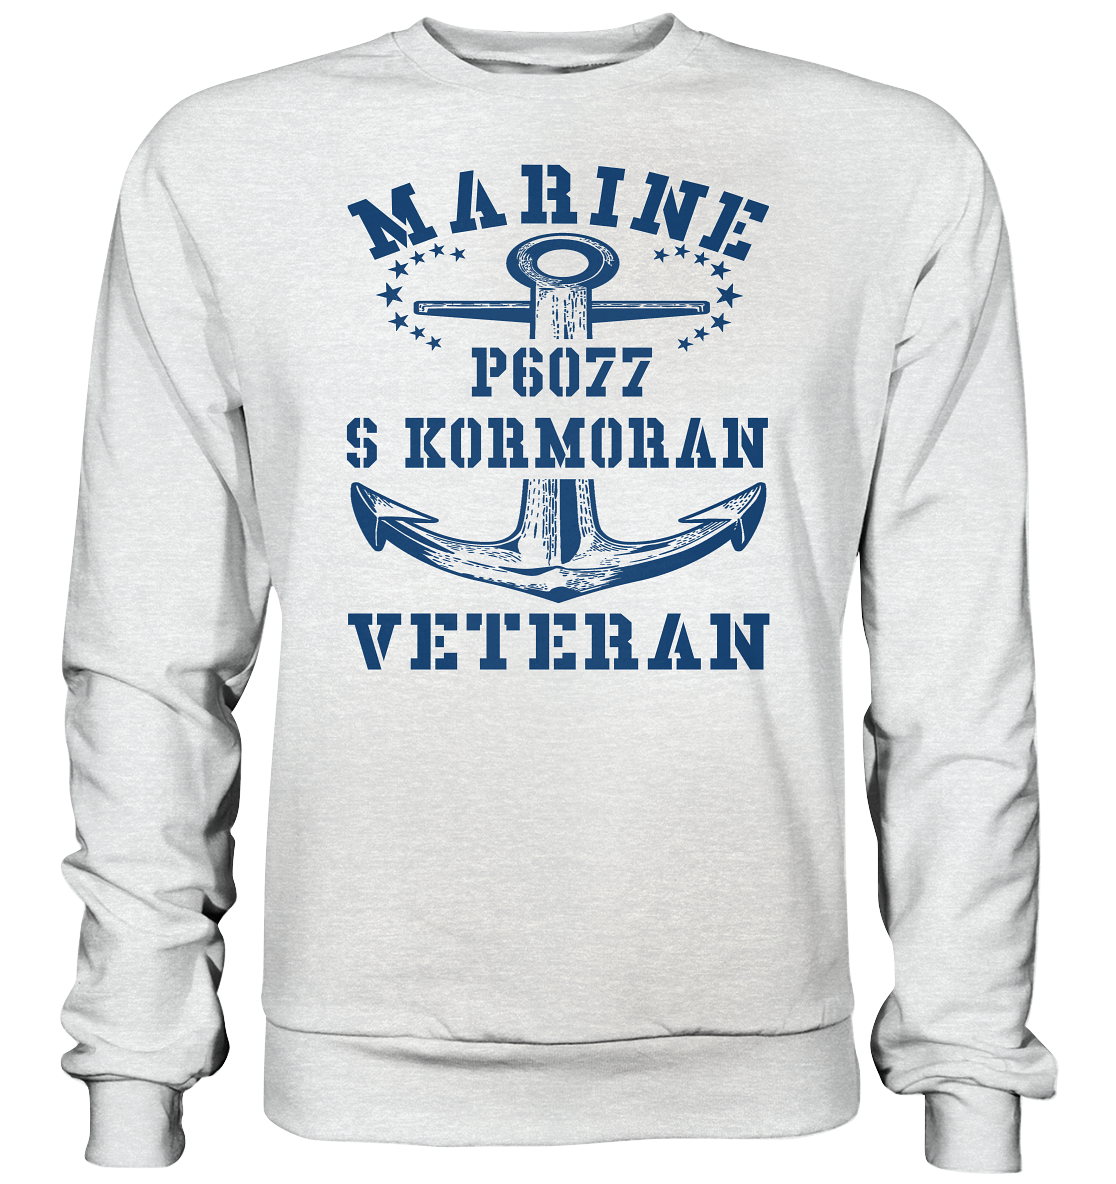 P6077 S KORMORAN Marine Veteran - Premium Sweatshirt